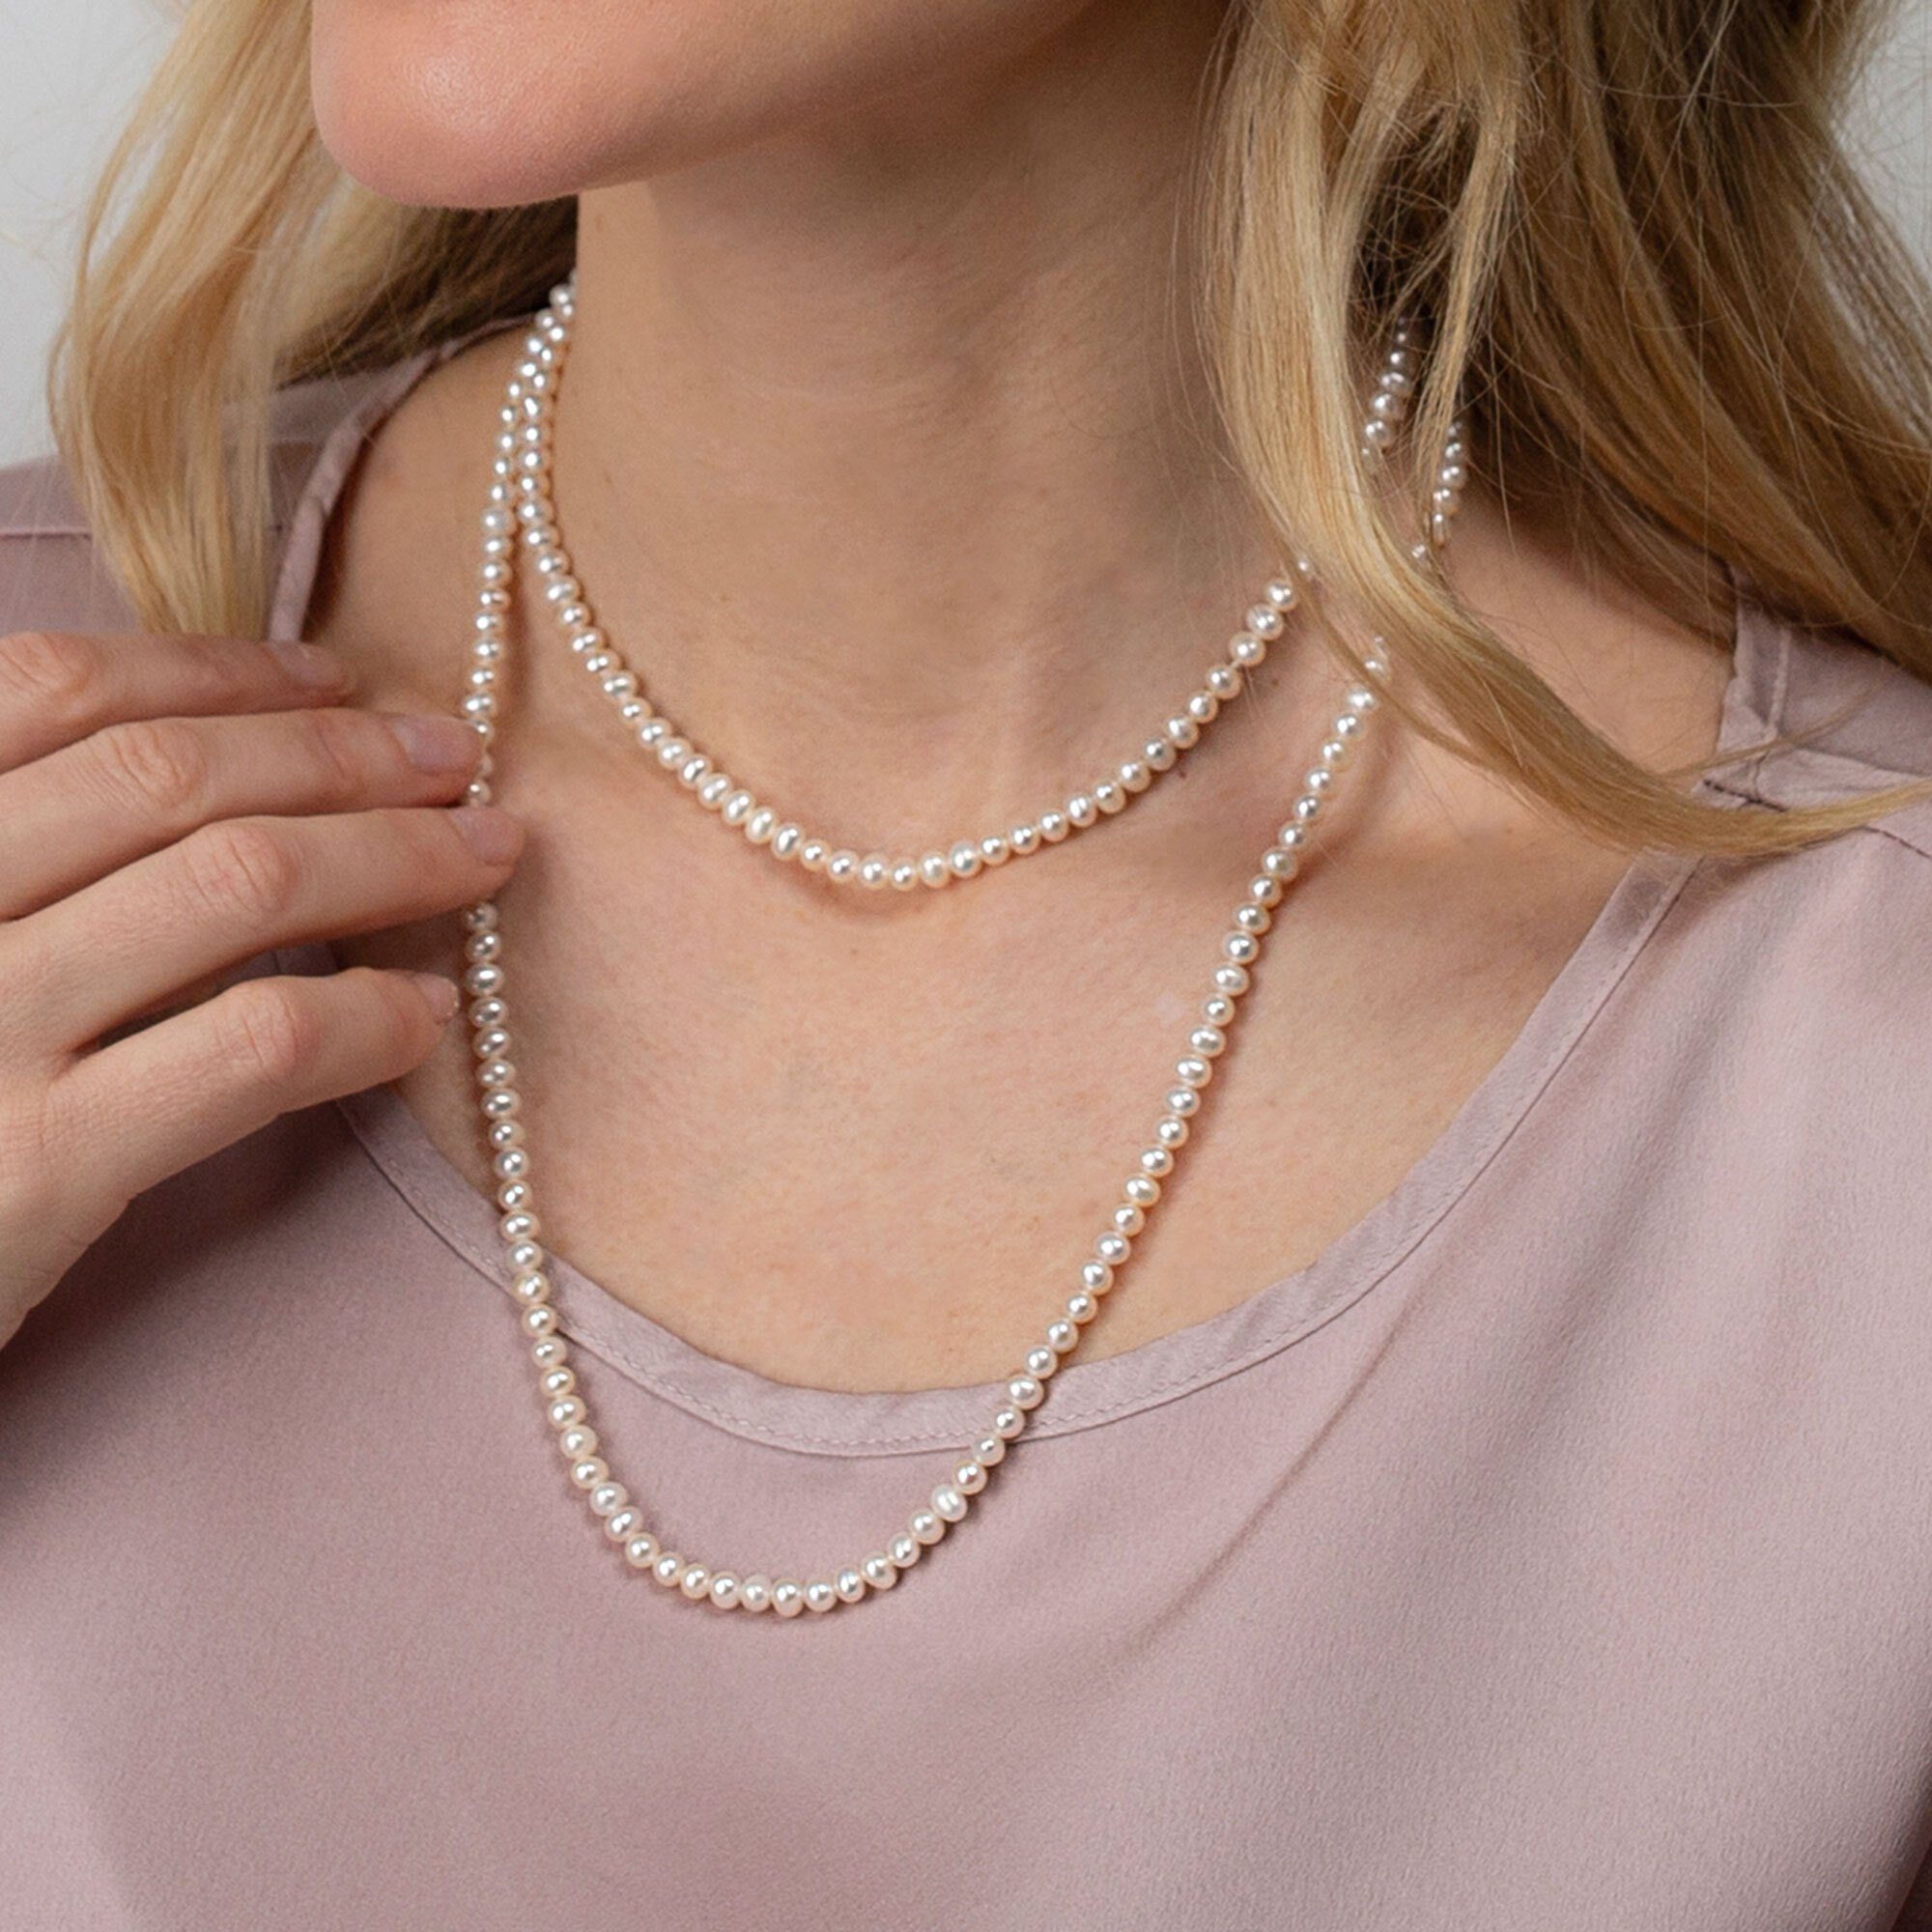 MOE silber/weiße AILORIA Silber/weiße armband-halskette Armband-Halskette Perle Armband perle,